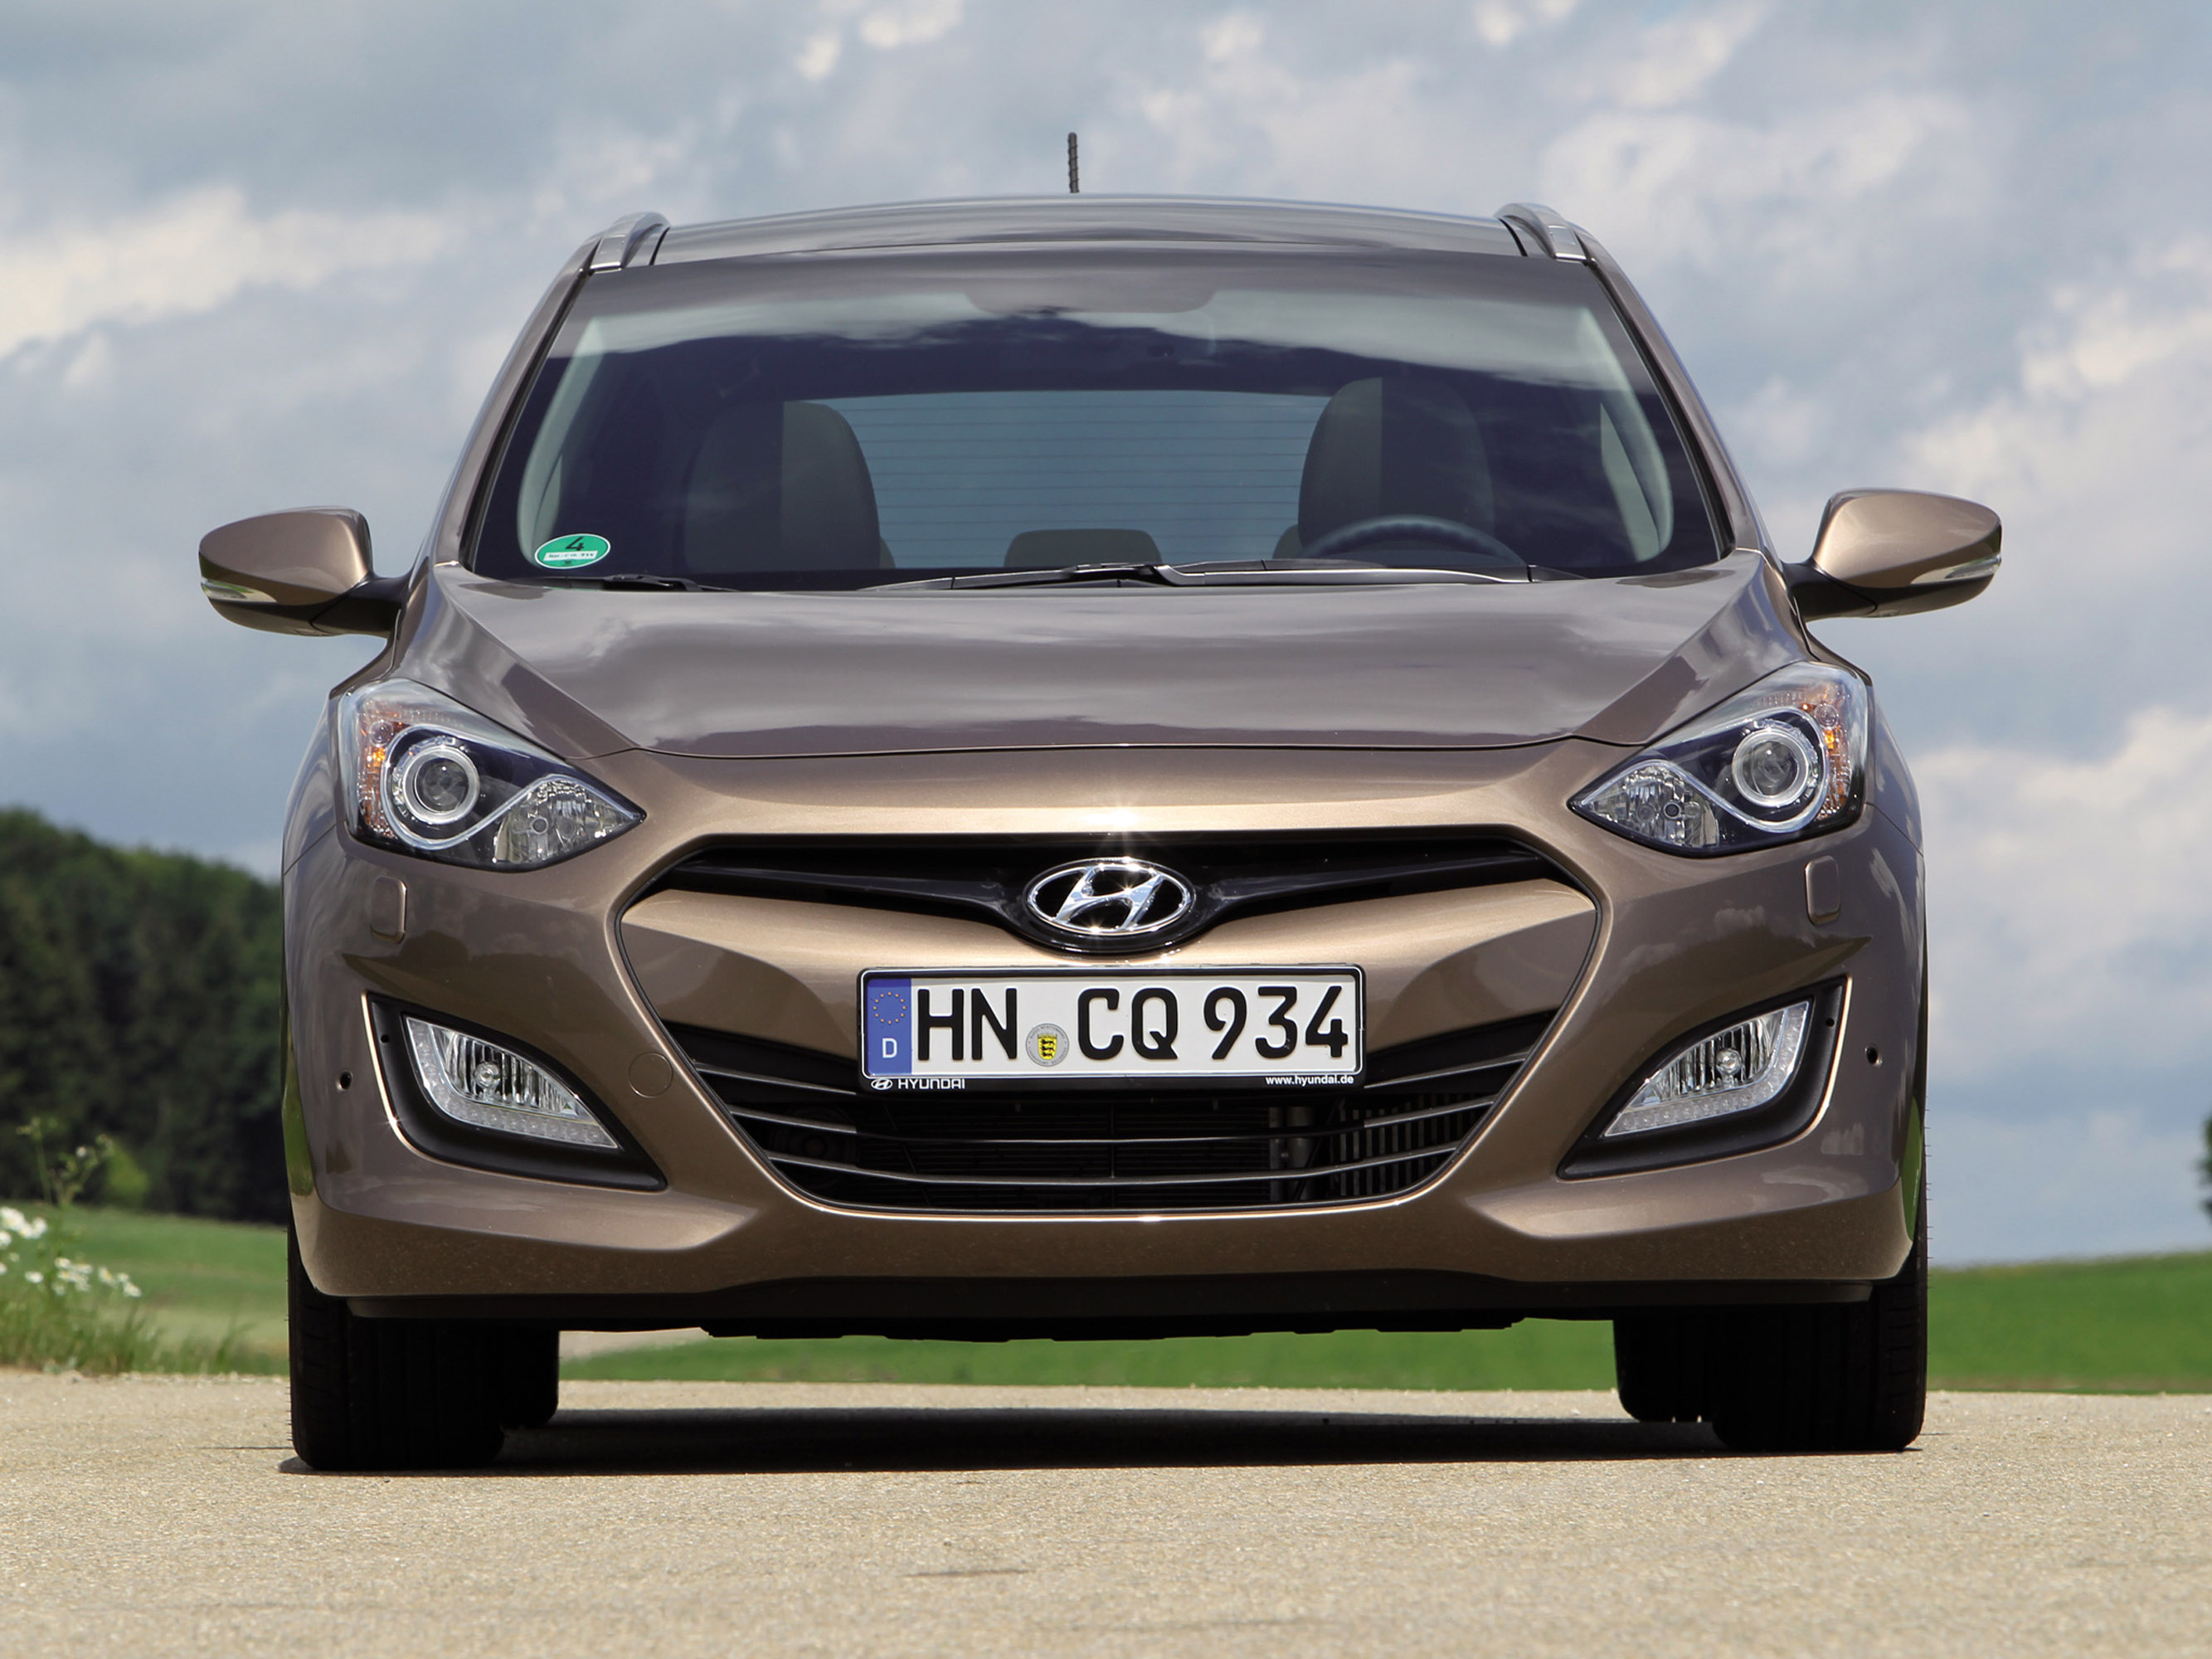 Хендай i30 2012 год. Hyundai i30 2013. Hyundai i30 Wagon. Hyundai i30 GD. Хендай i30 универсал.